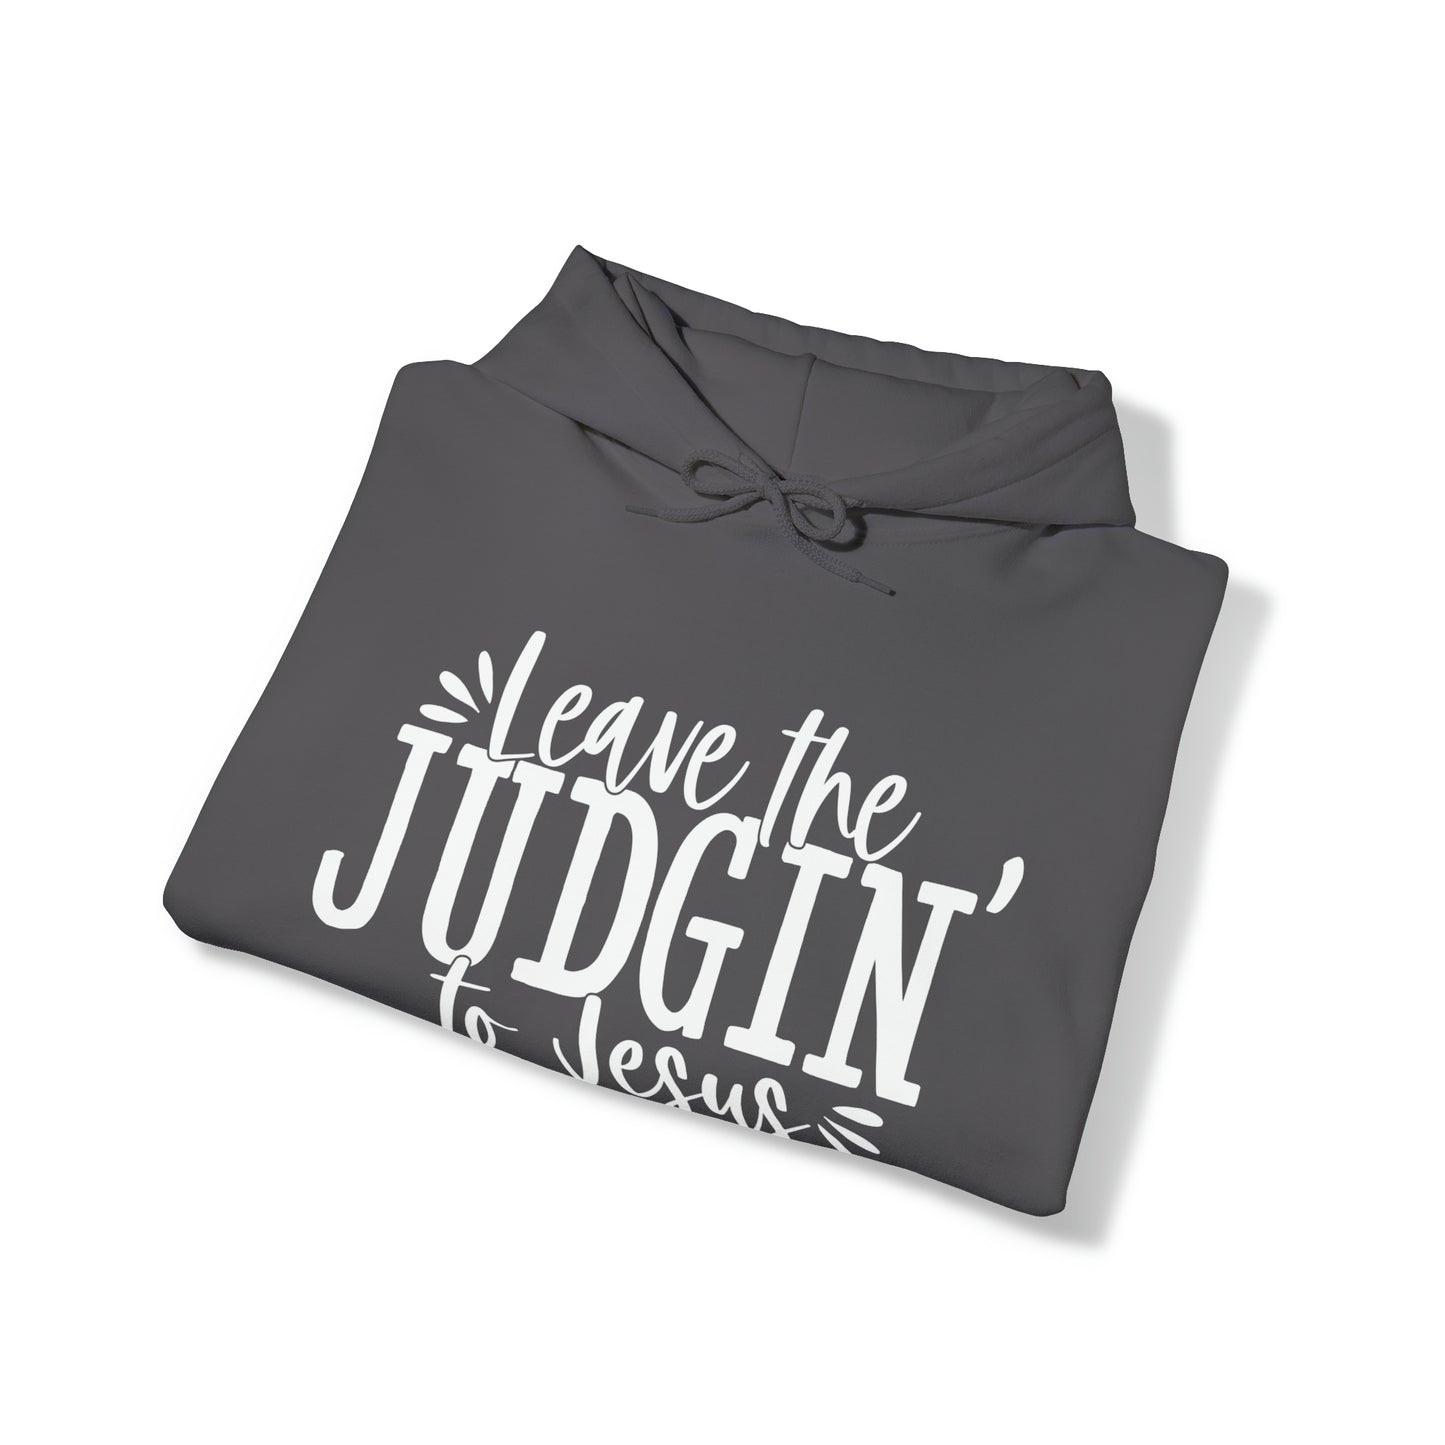 Leave The Judgin' To Jesus Unisex Heavy Blend™ Hooded Sweatshirt